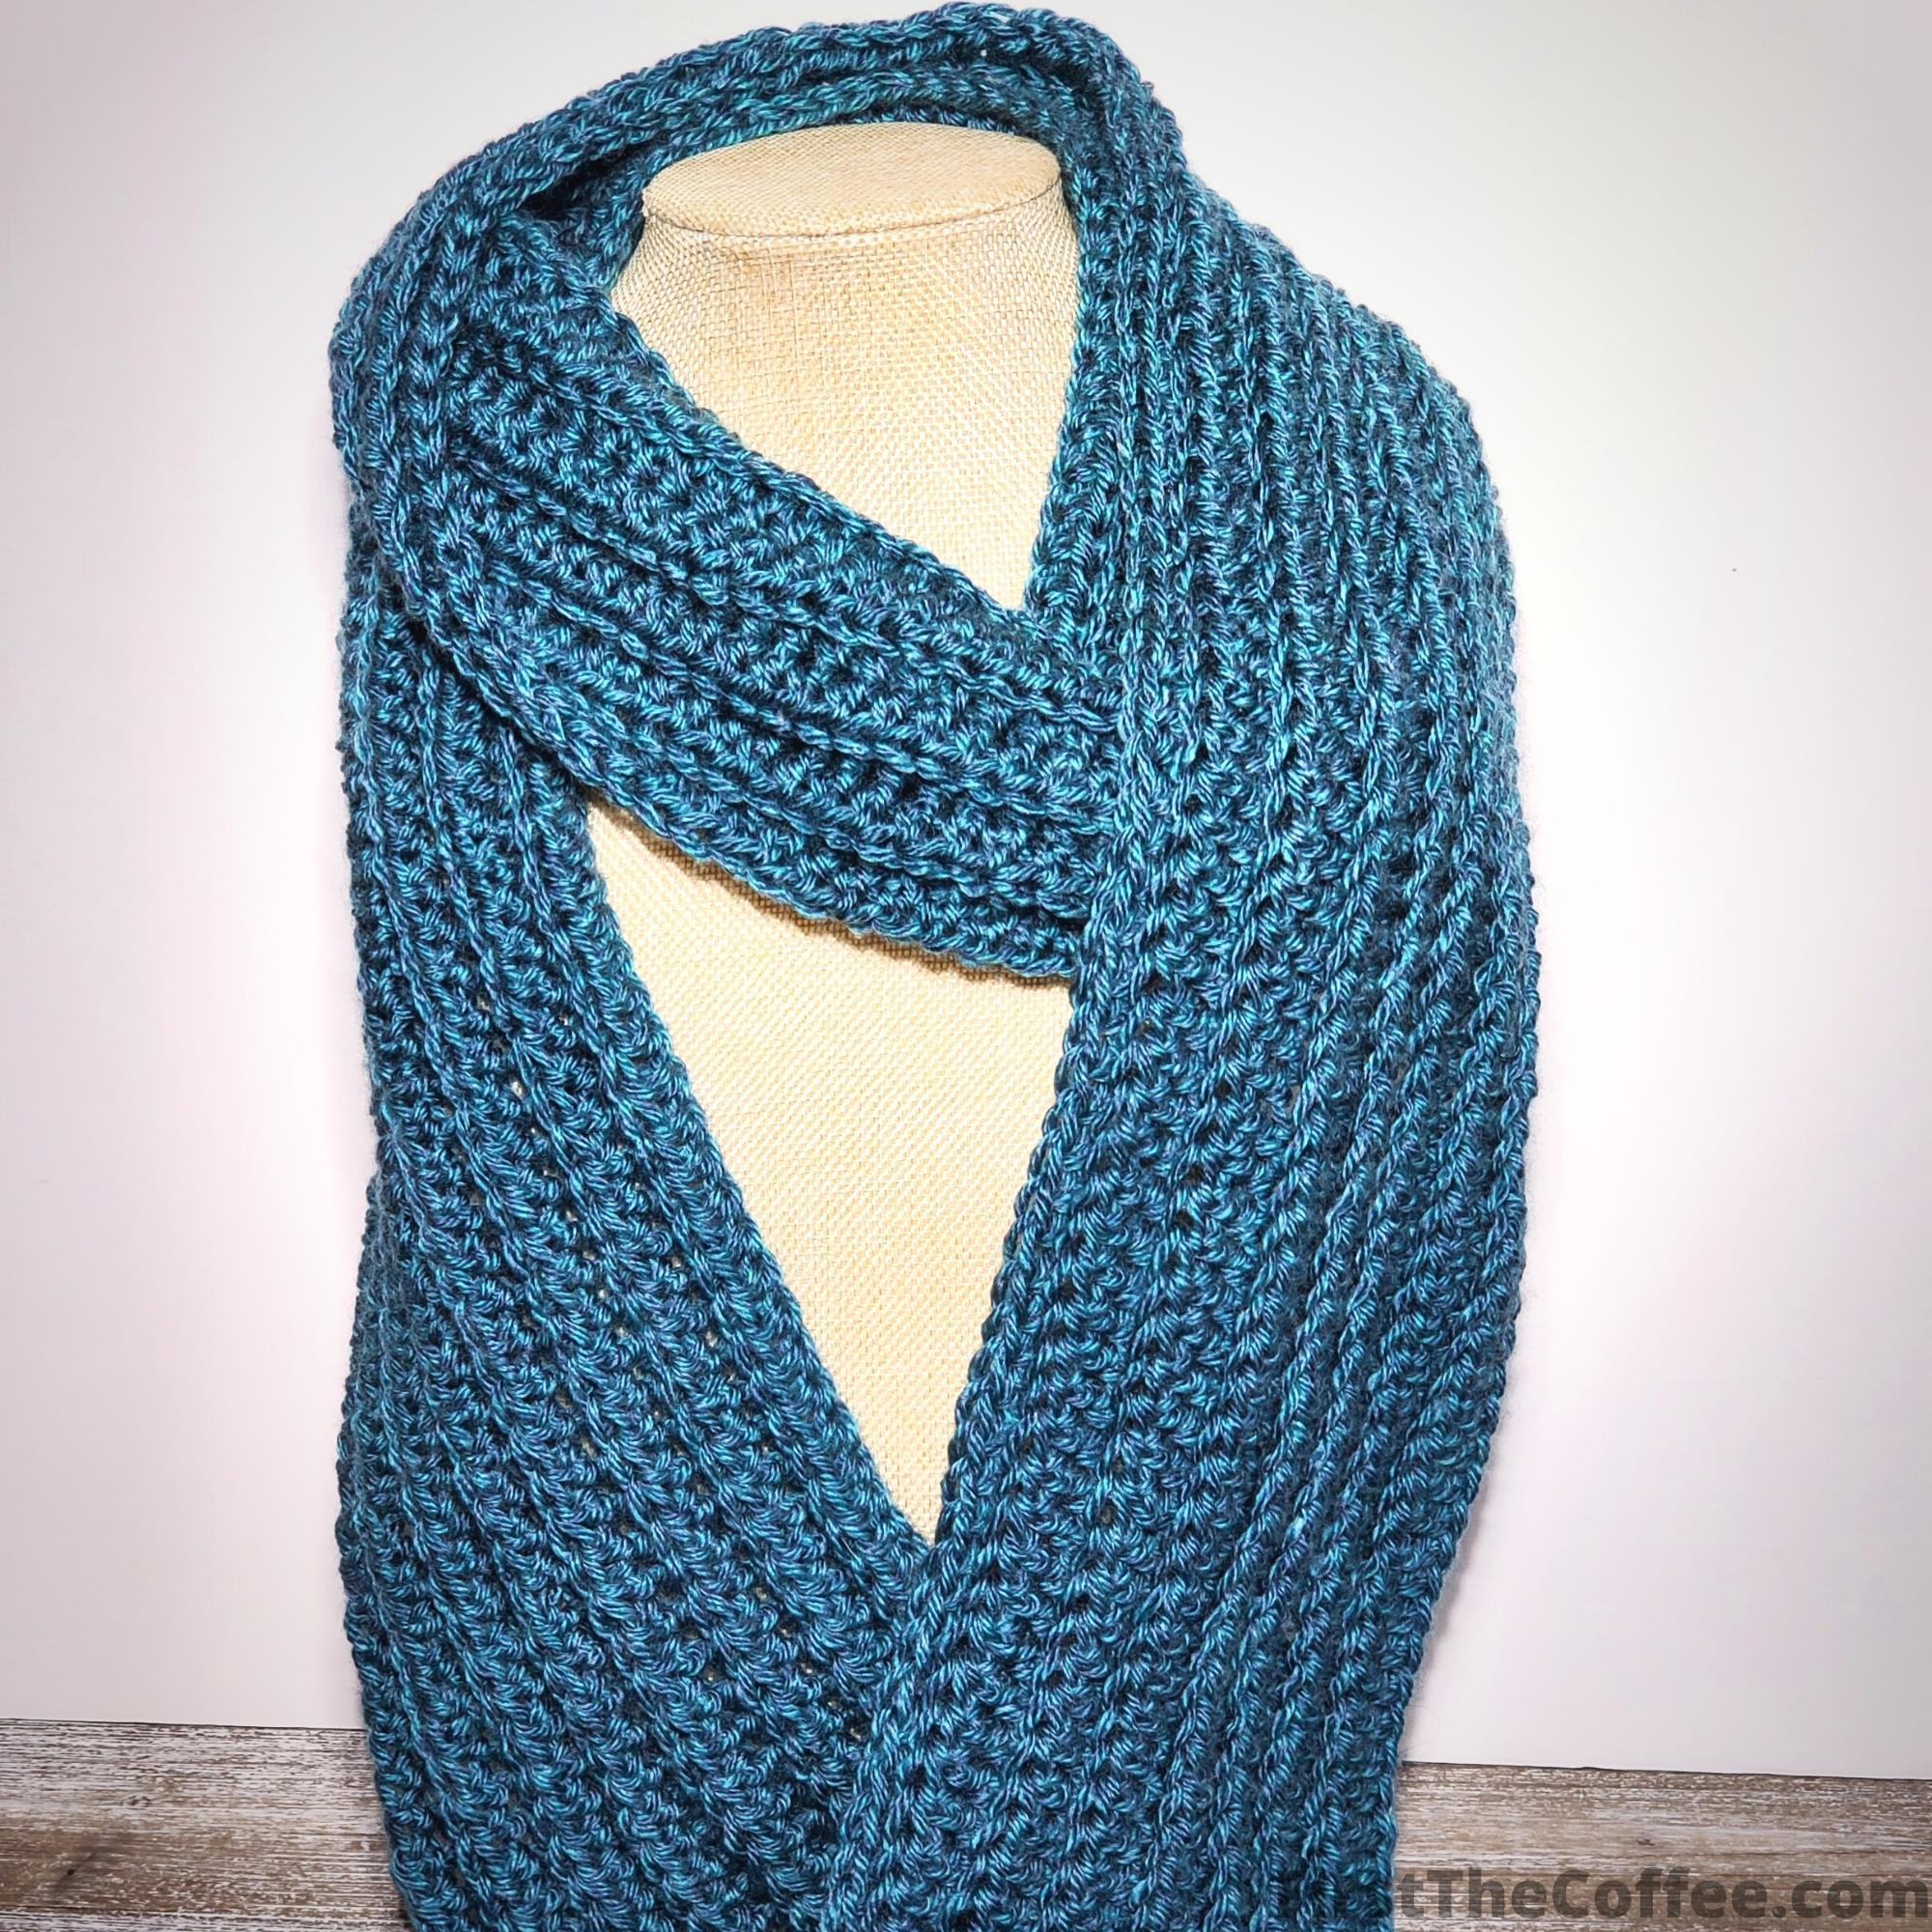 Easy Half Double Crochet Scarf: Free Pattern - First The Coffee Crochet